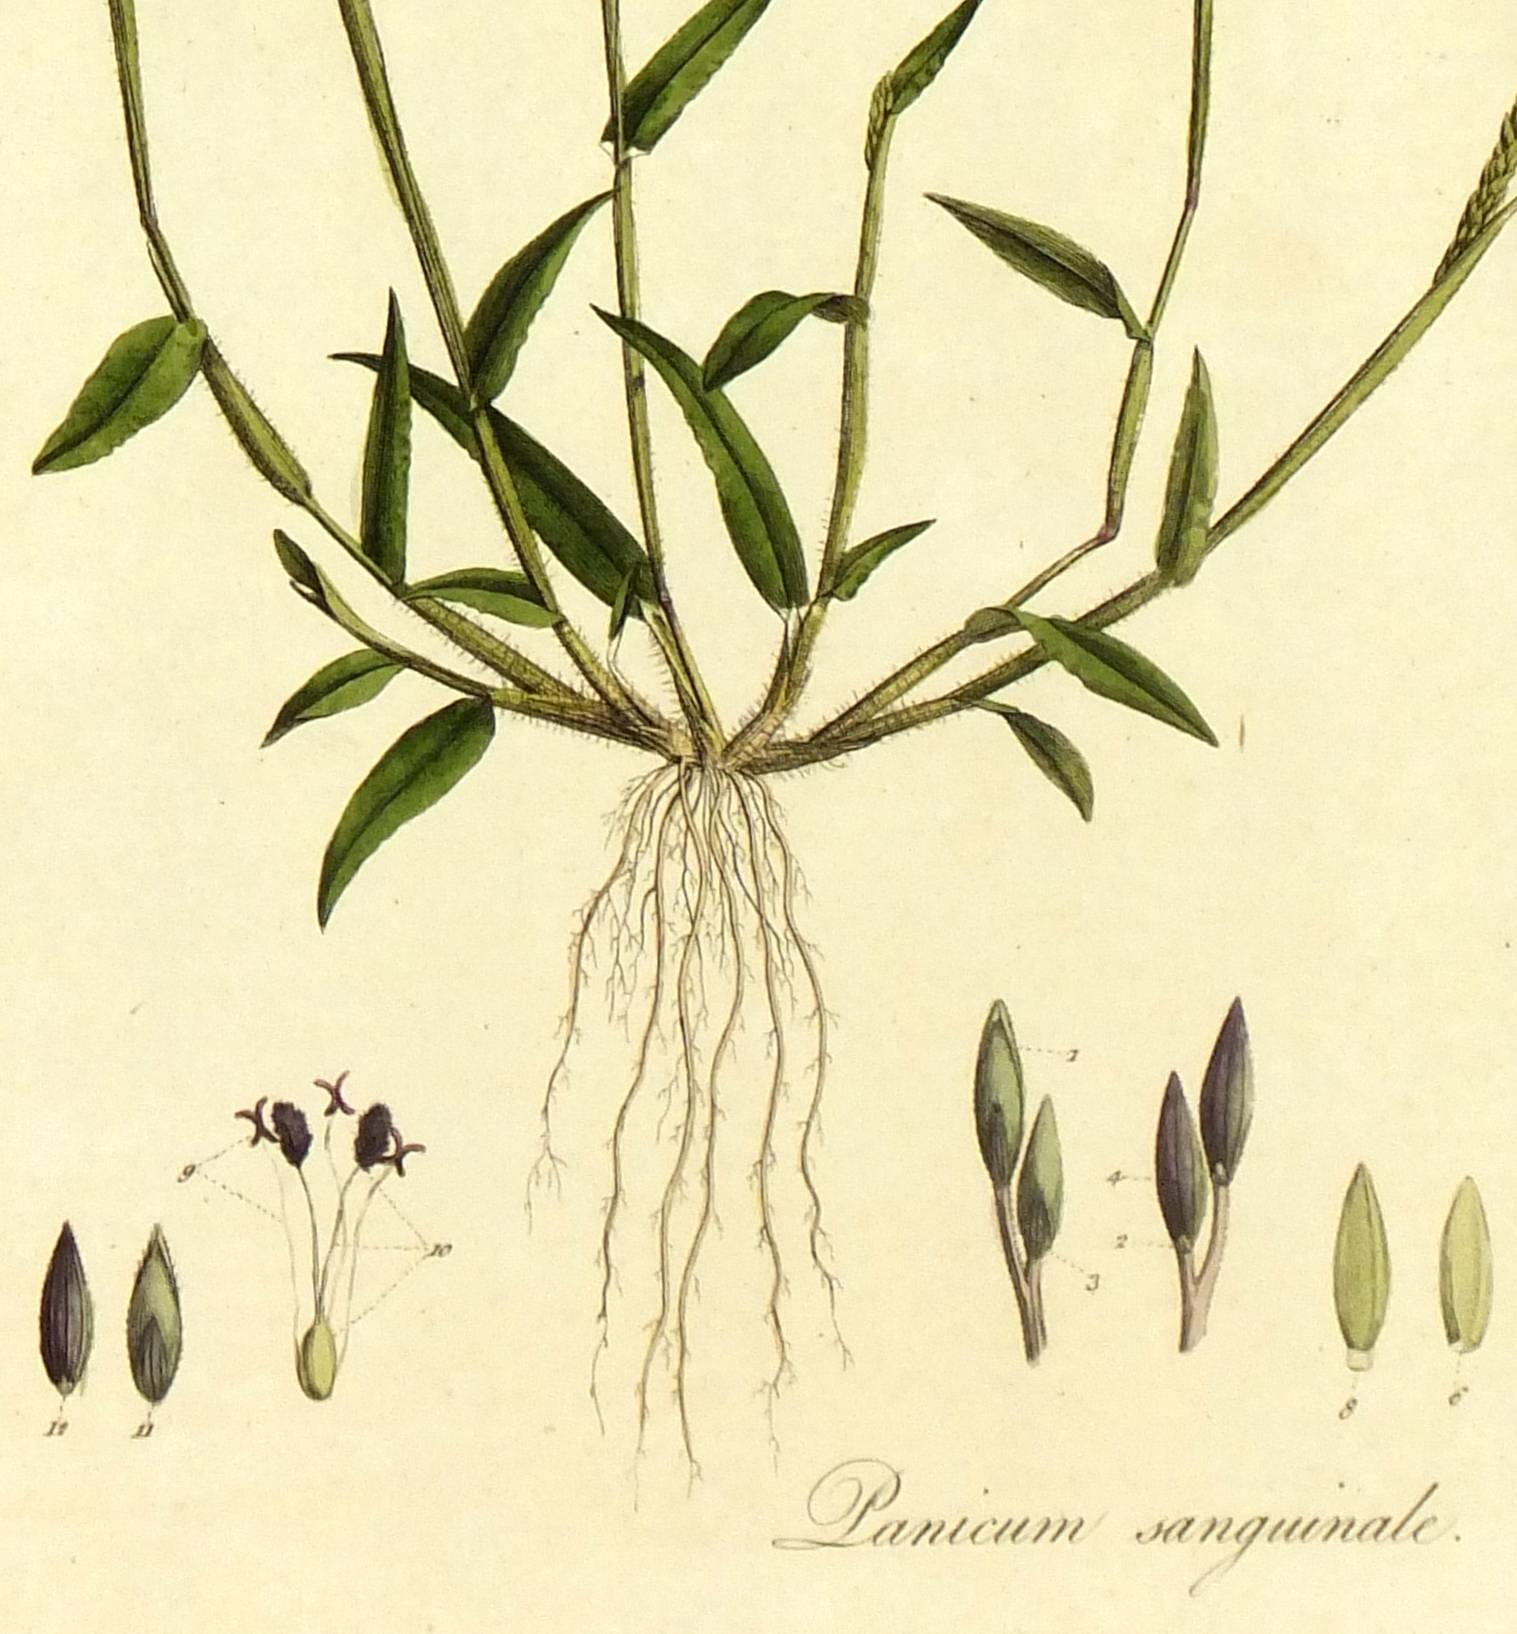 Panicum sanguinale, from 